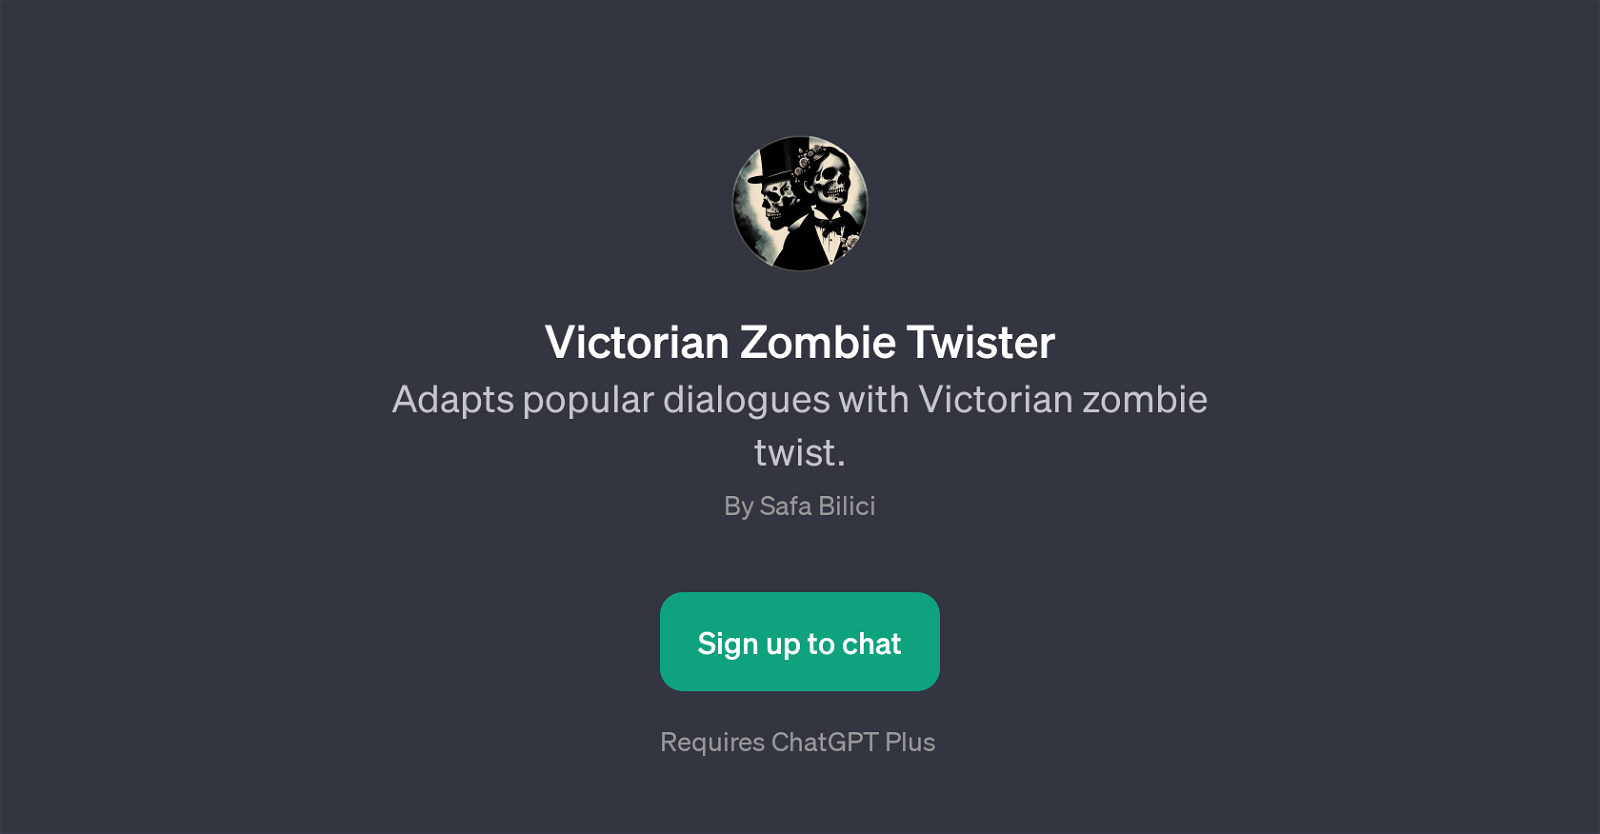 Victorian Zombie Twister website